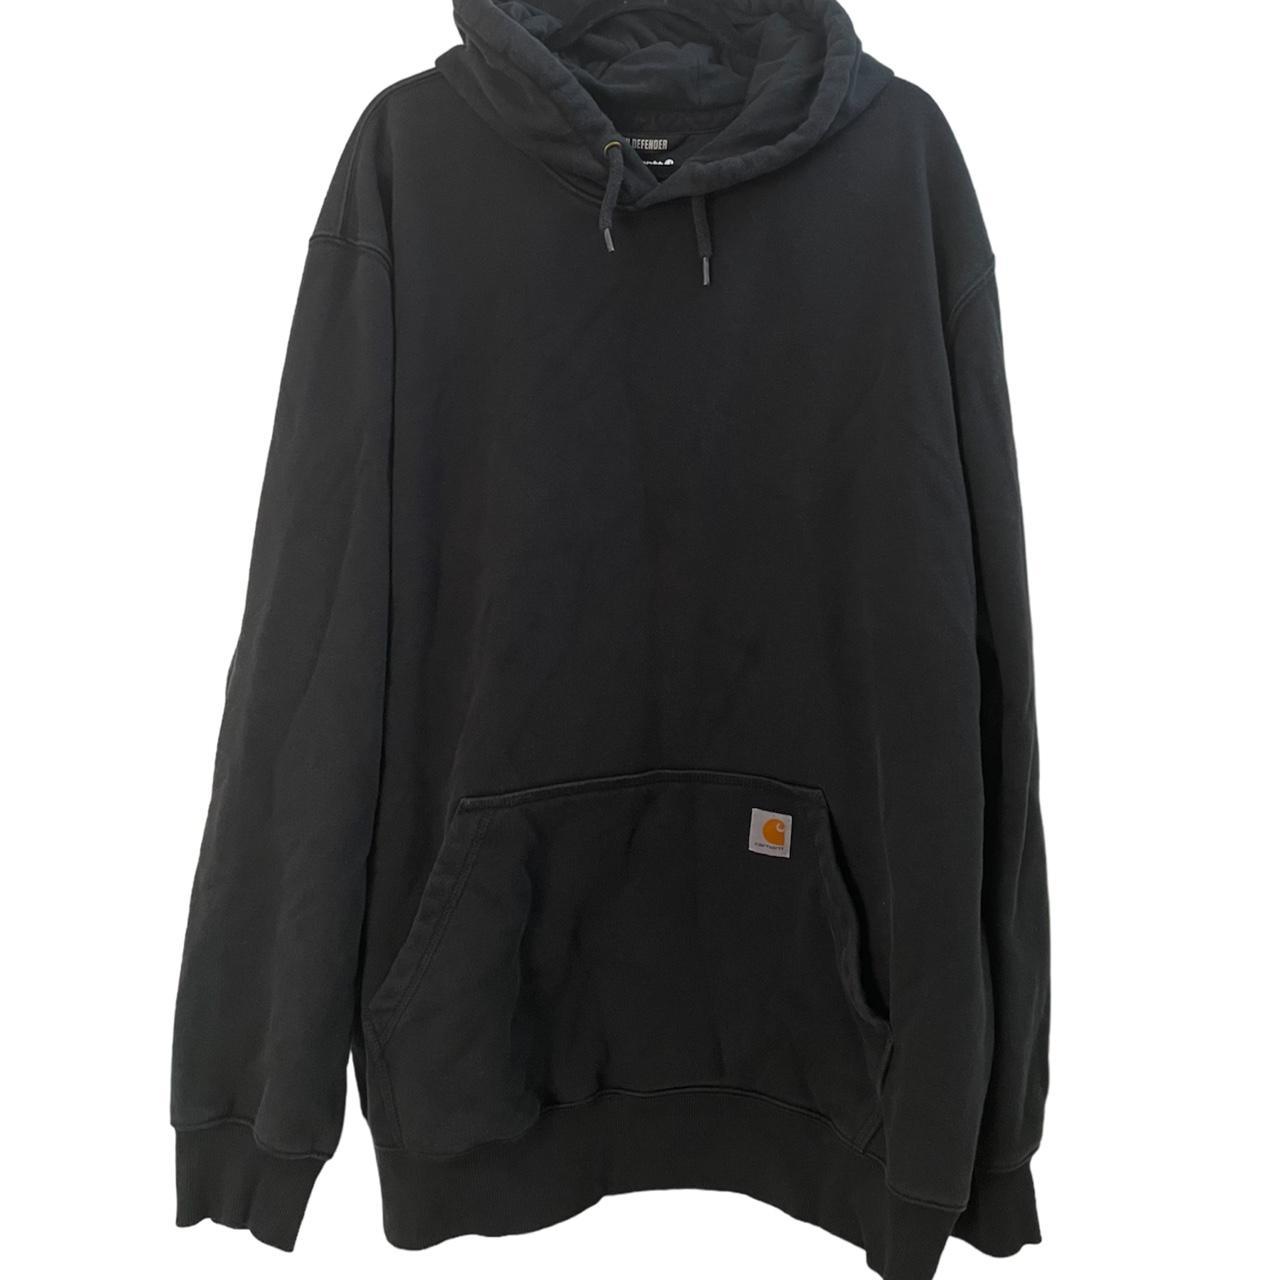 Carhartt hoodie #streetwear #cozy #carhartt - Depop